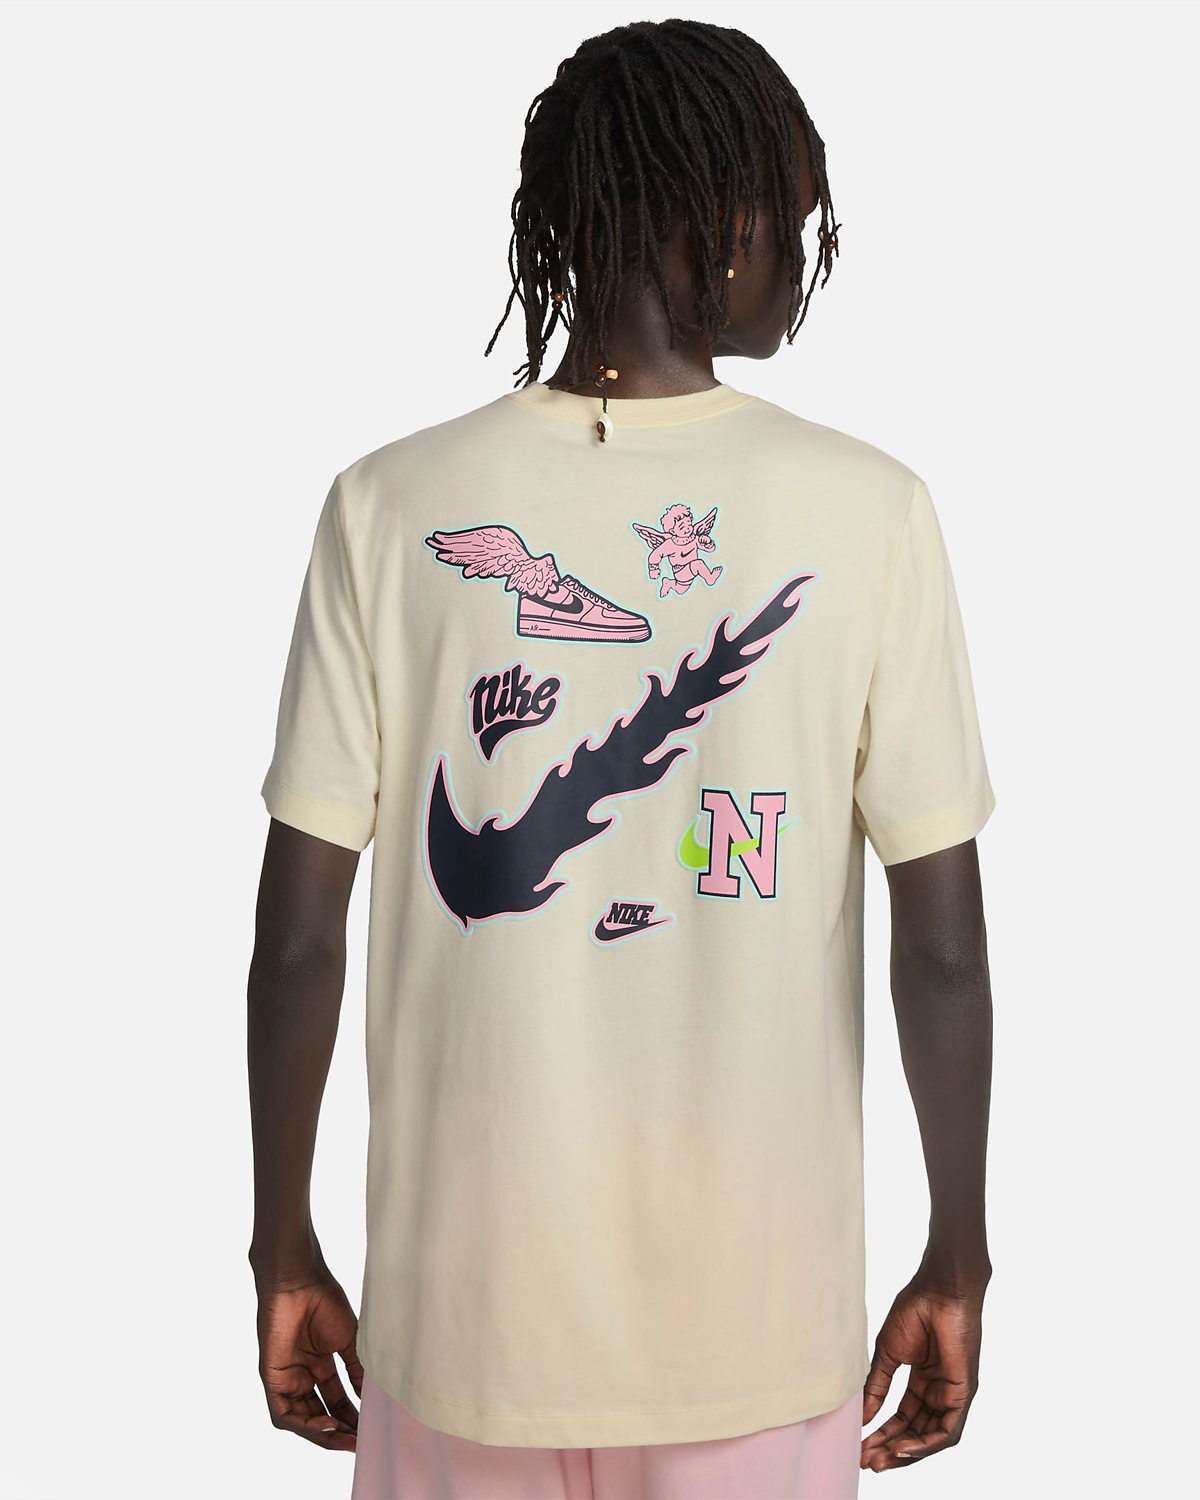 Nike-Sportswear-T-Shirt-Coconut-Milk-Pink-2